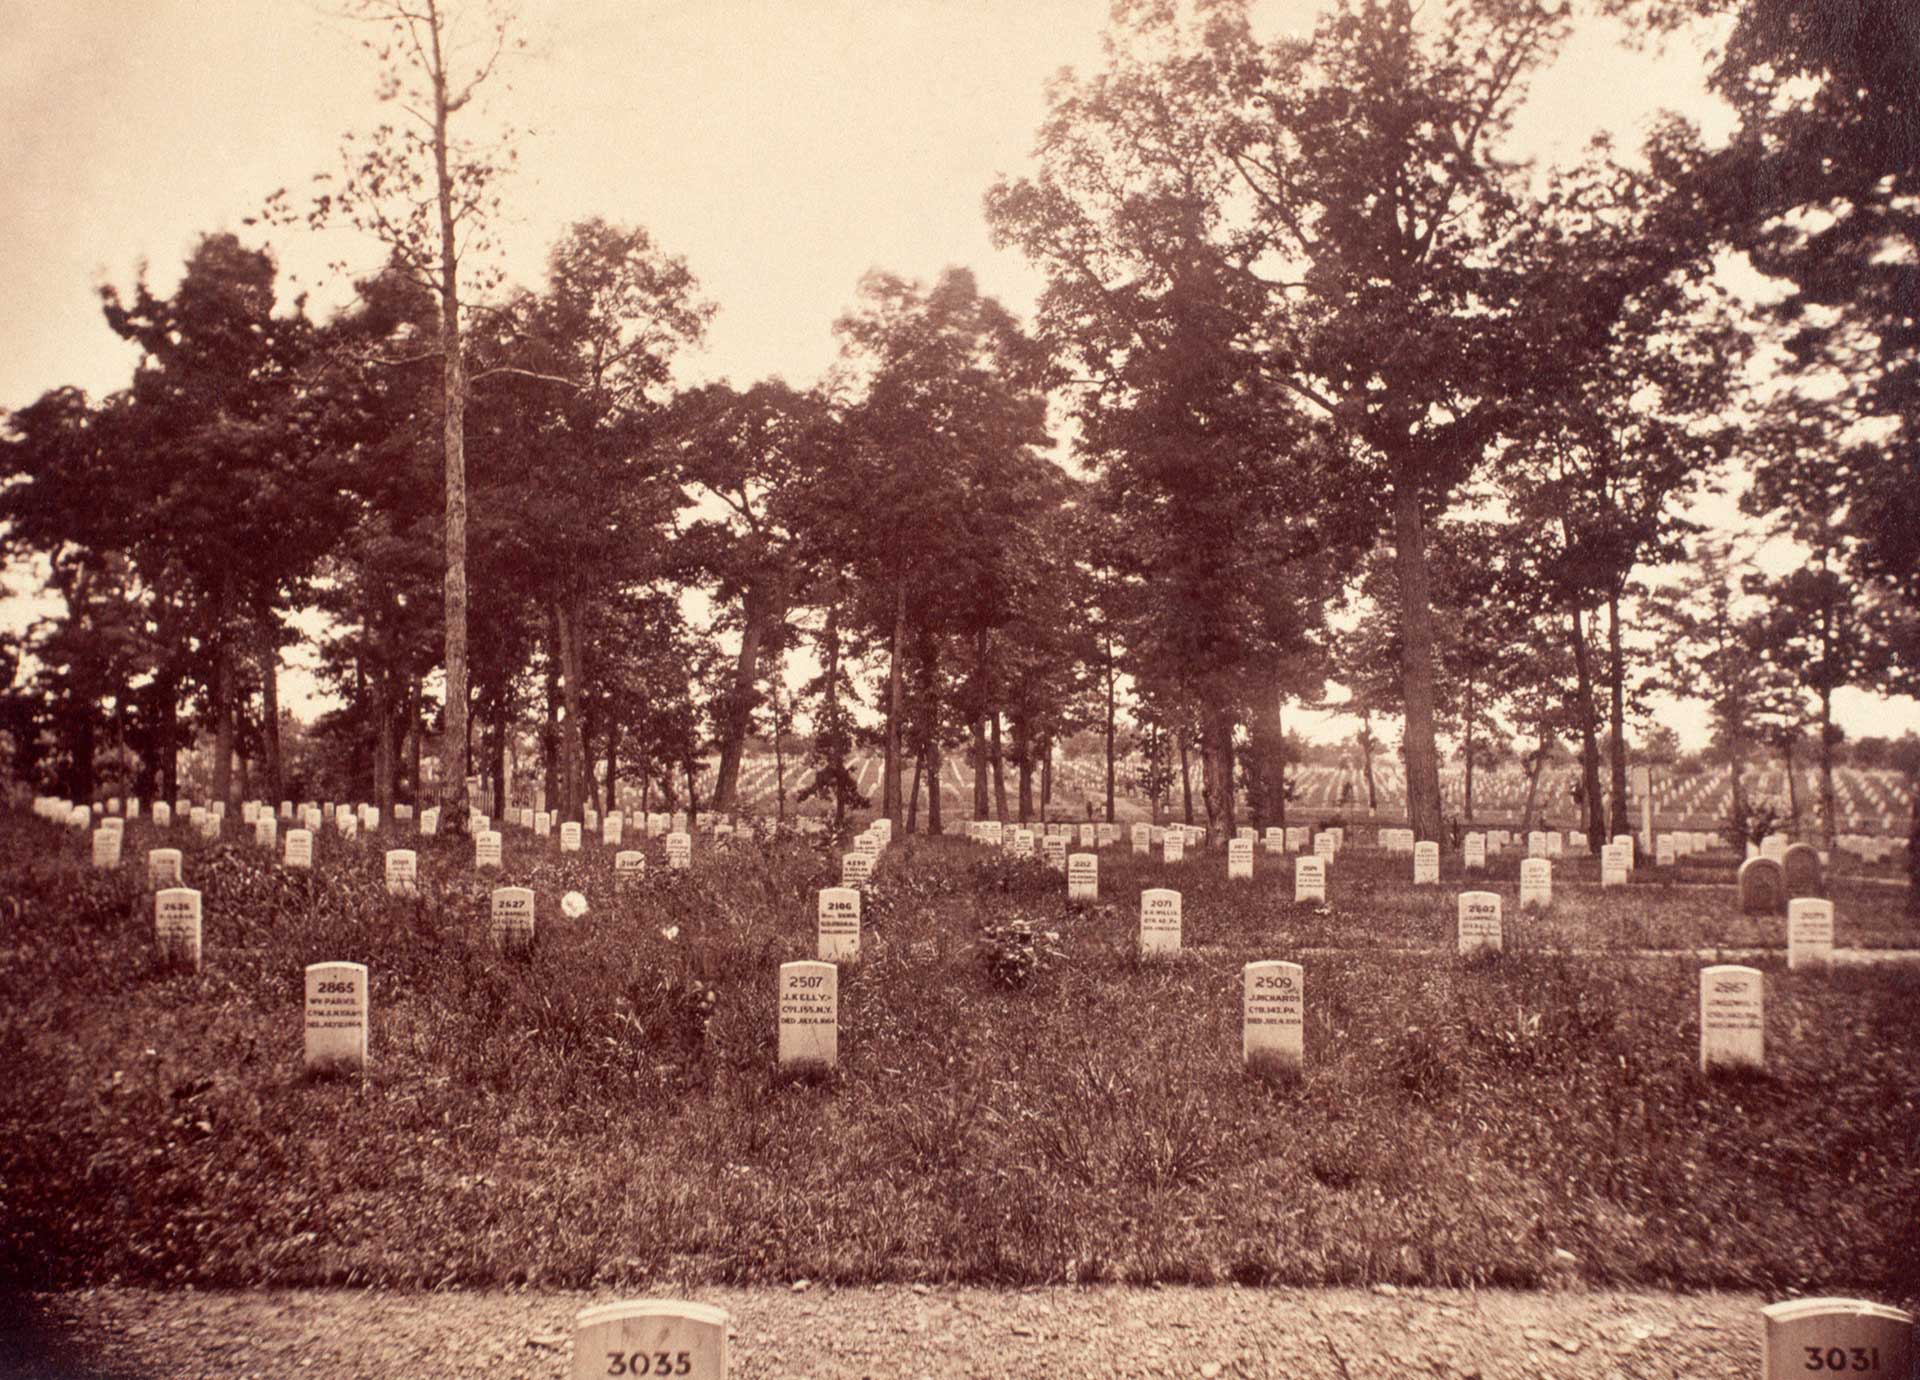 Arlington National Cemetery during the Civil War.